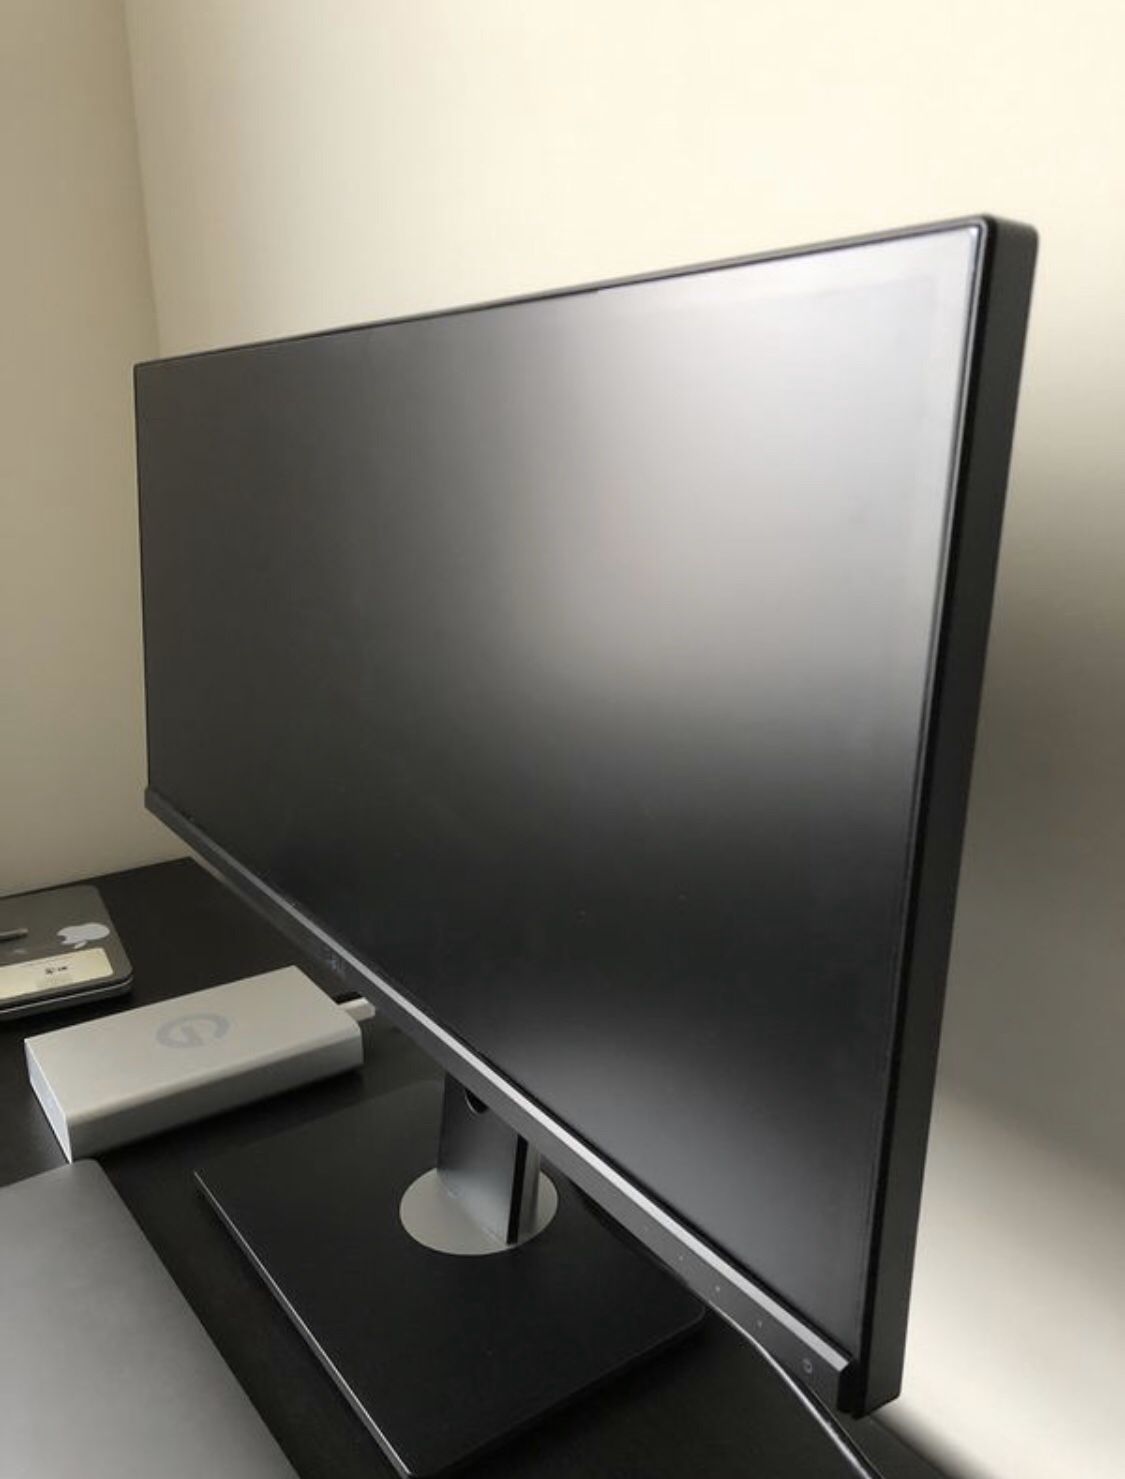 Dell Ultrawide 29 inch monitor